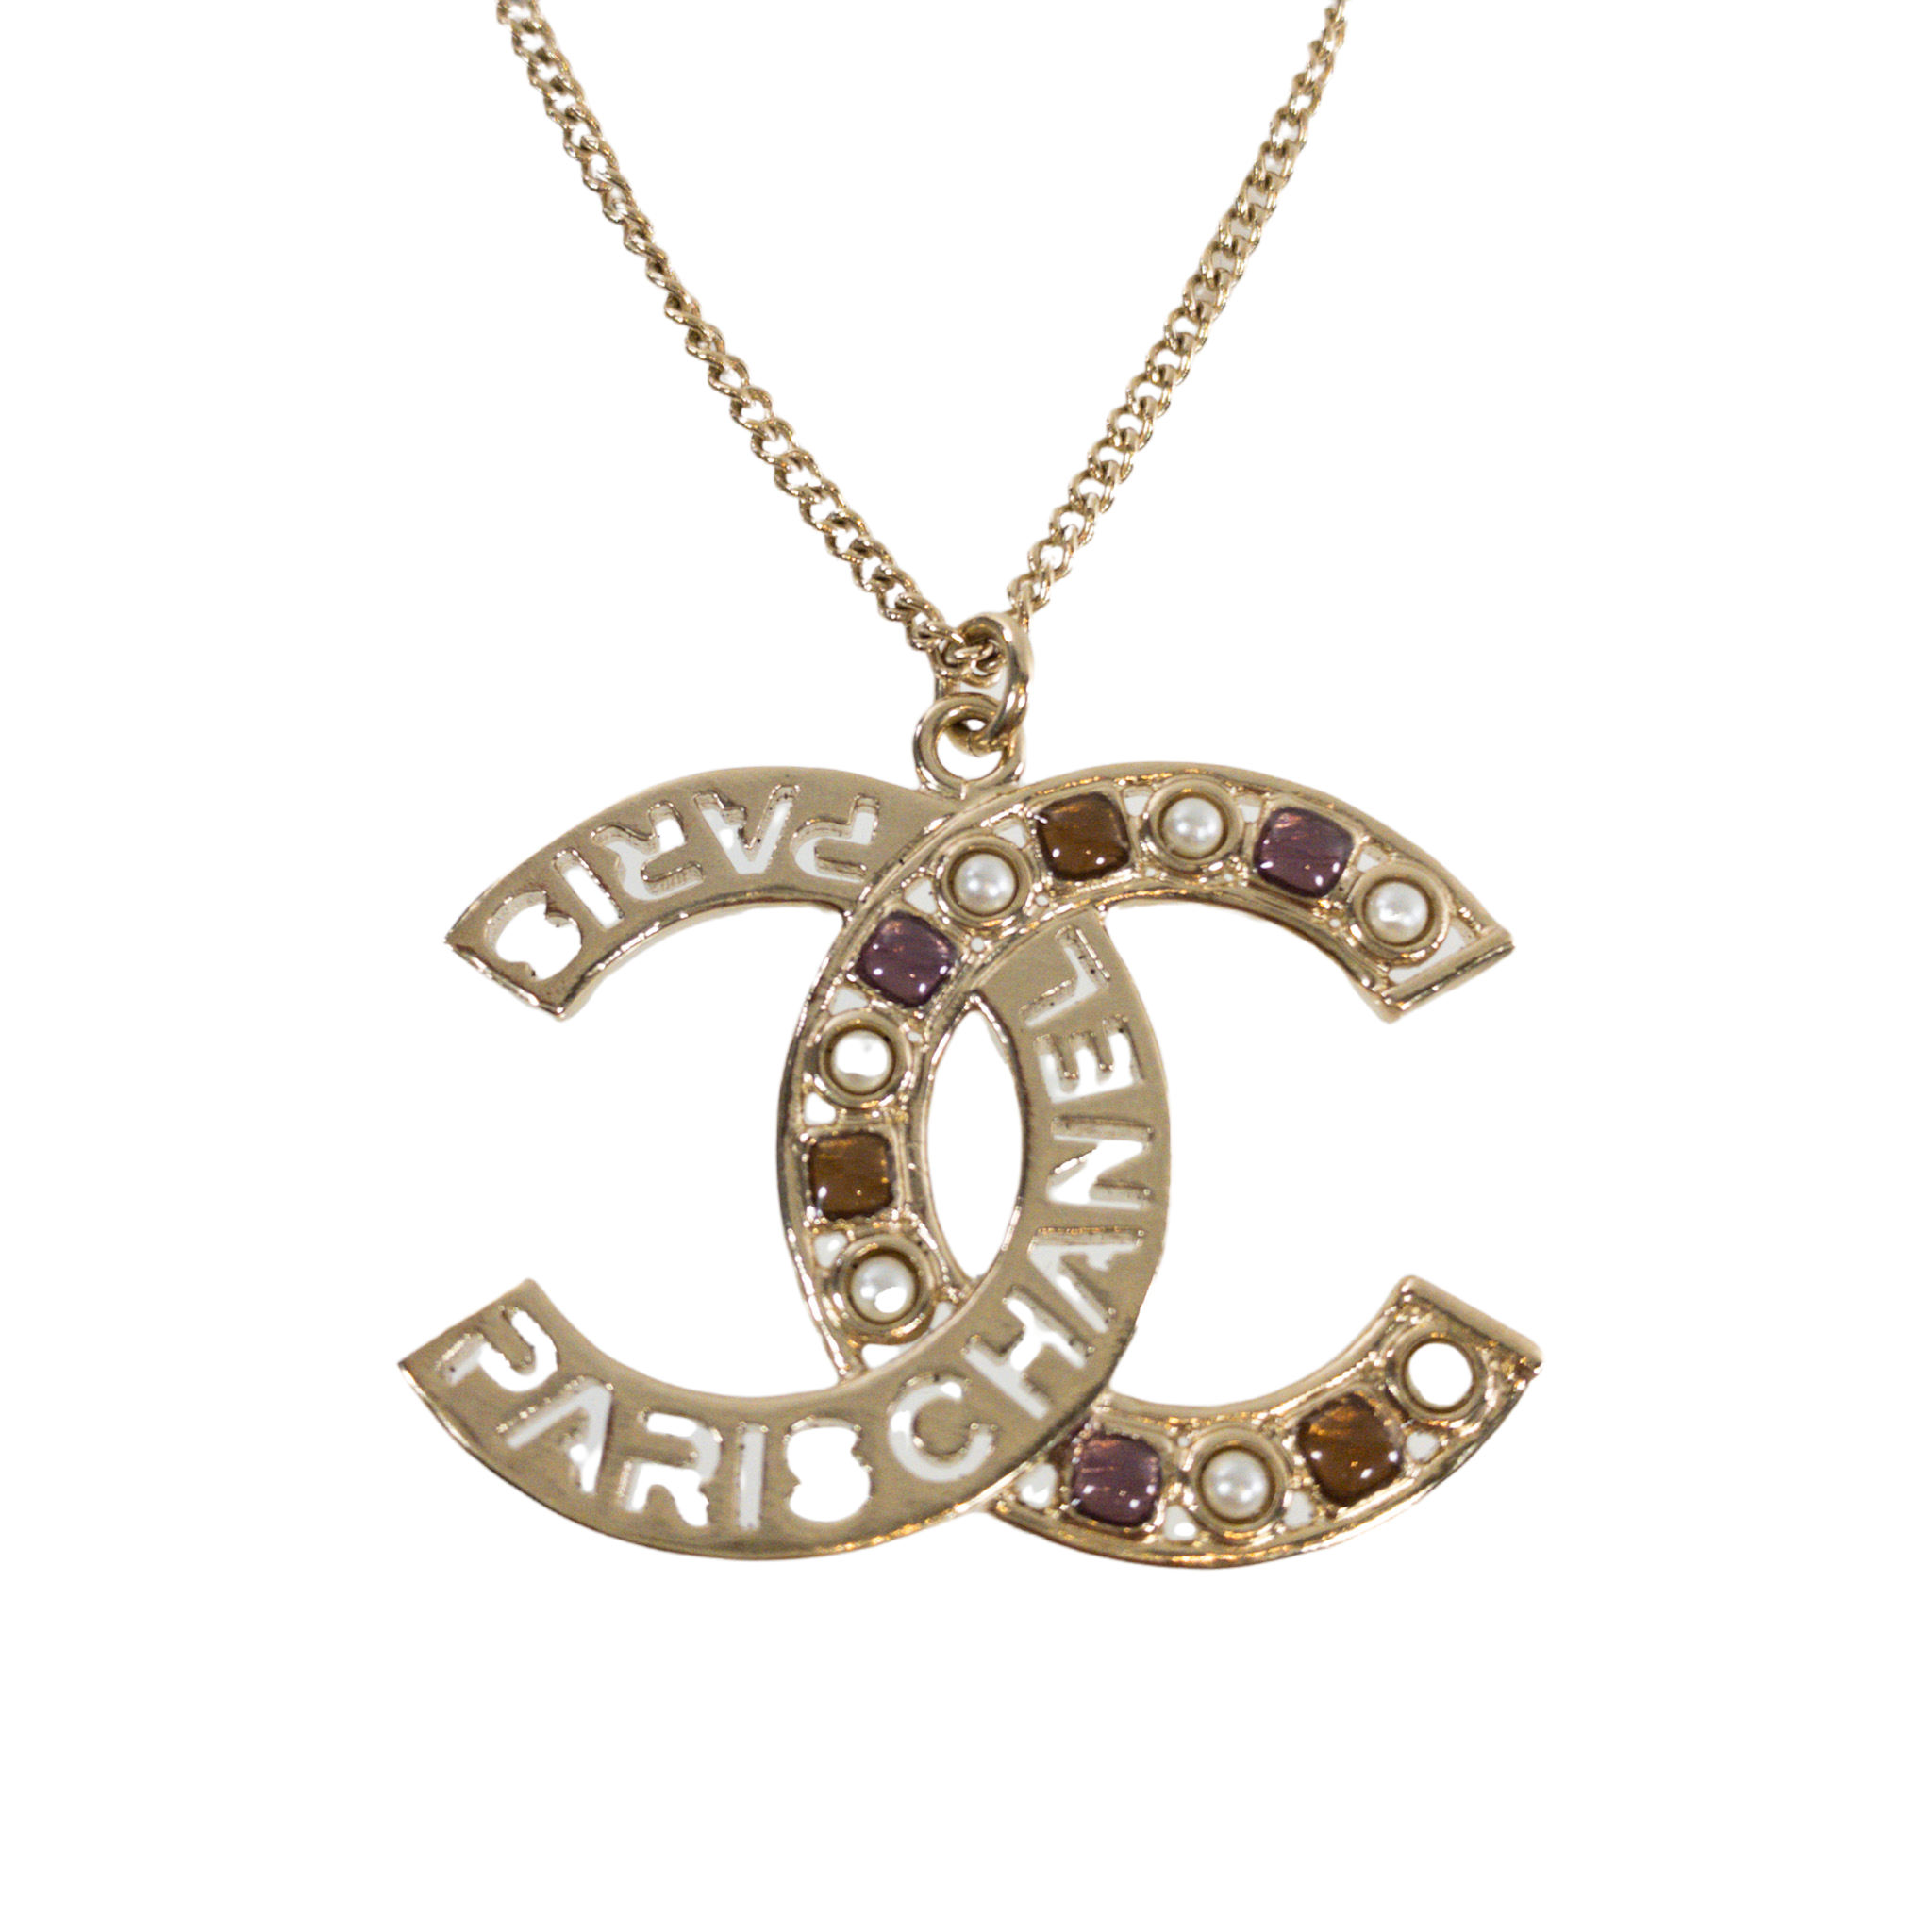 Chanel CHANEL Necklace Coco Mark Metal/Fake Pearl/Rhinestone Gold/White/Silver  Women's